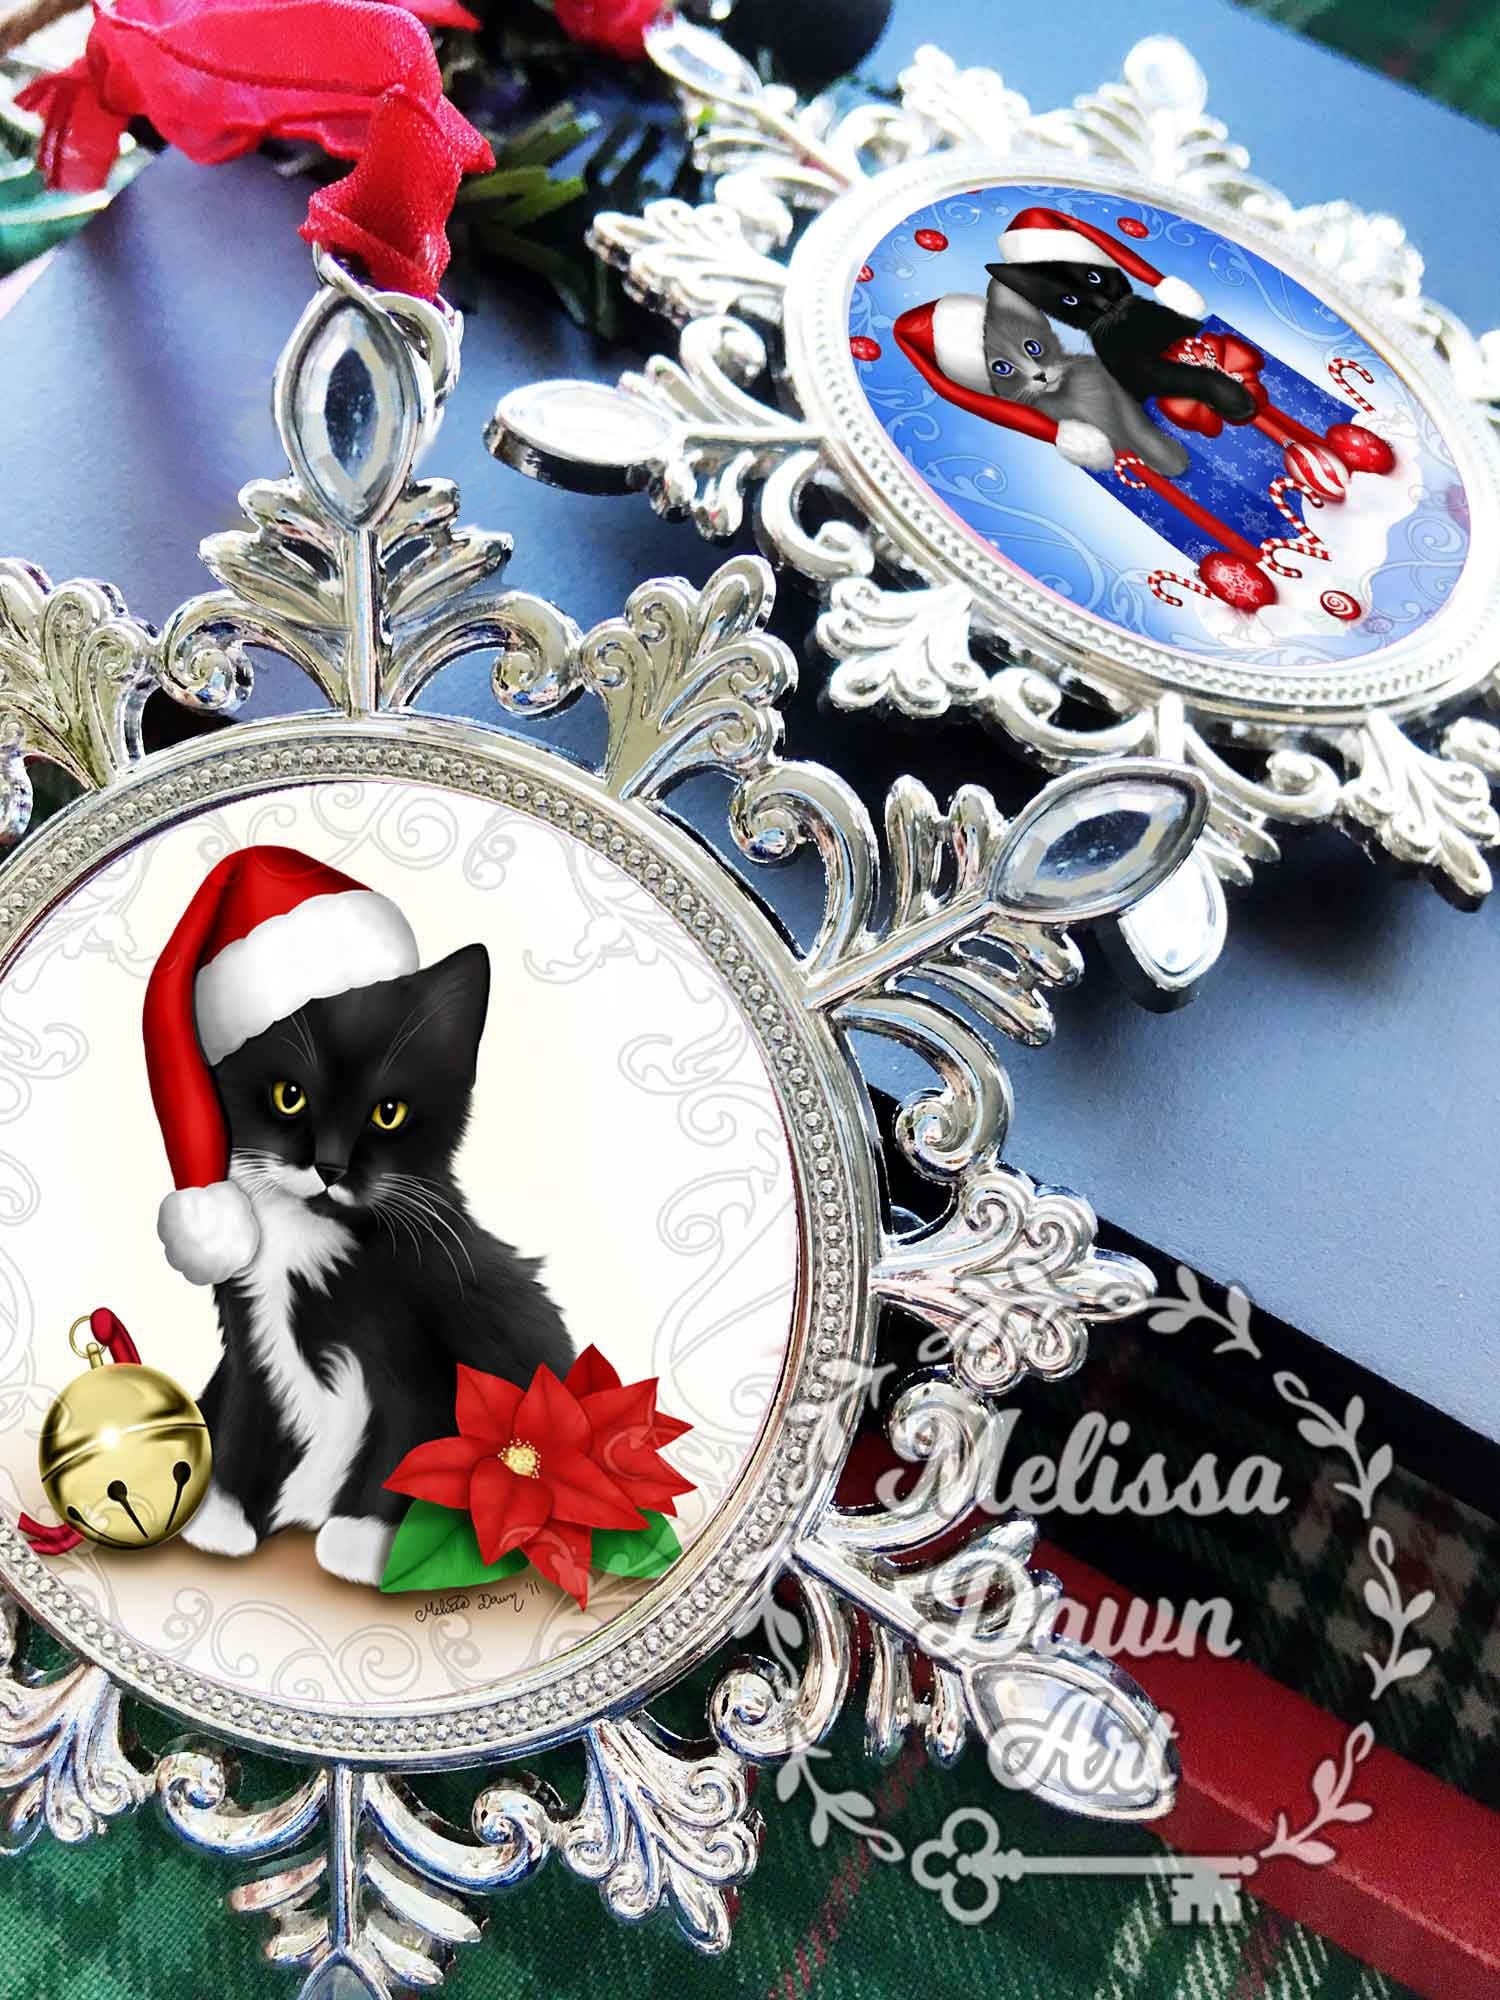 White Cat Ornament / Custom Cat Ornament / Cat Christmas Ornament / Cat Lover Gift / White Cat Gift / North Pole Kitten / Snowflake Ornament